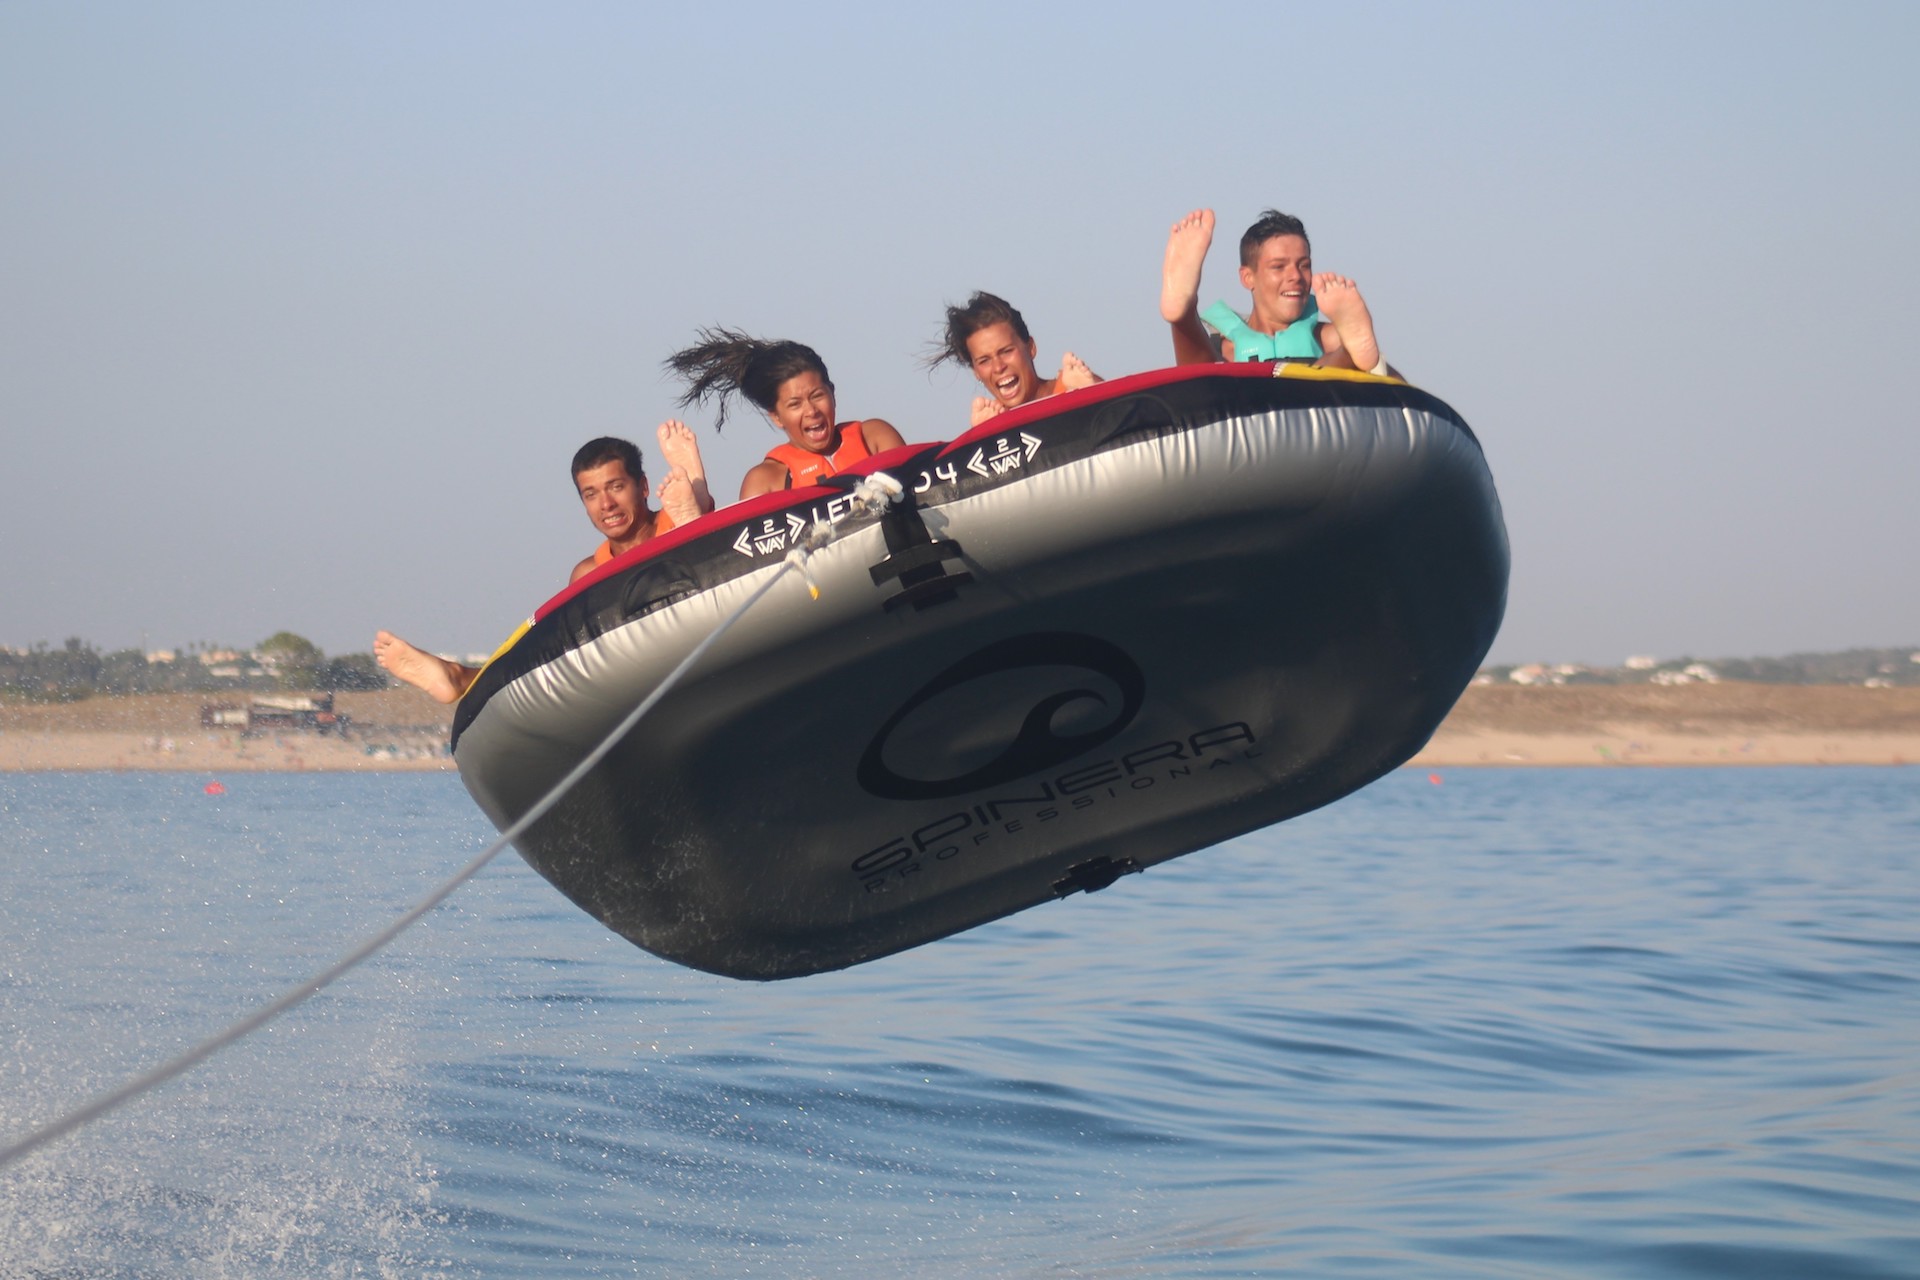 Fun watersports in Armação de Pêra - “crazy sofa”